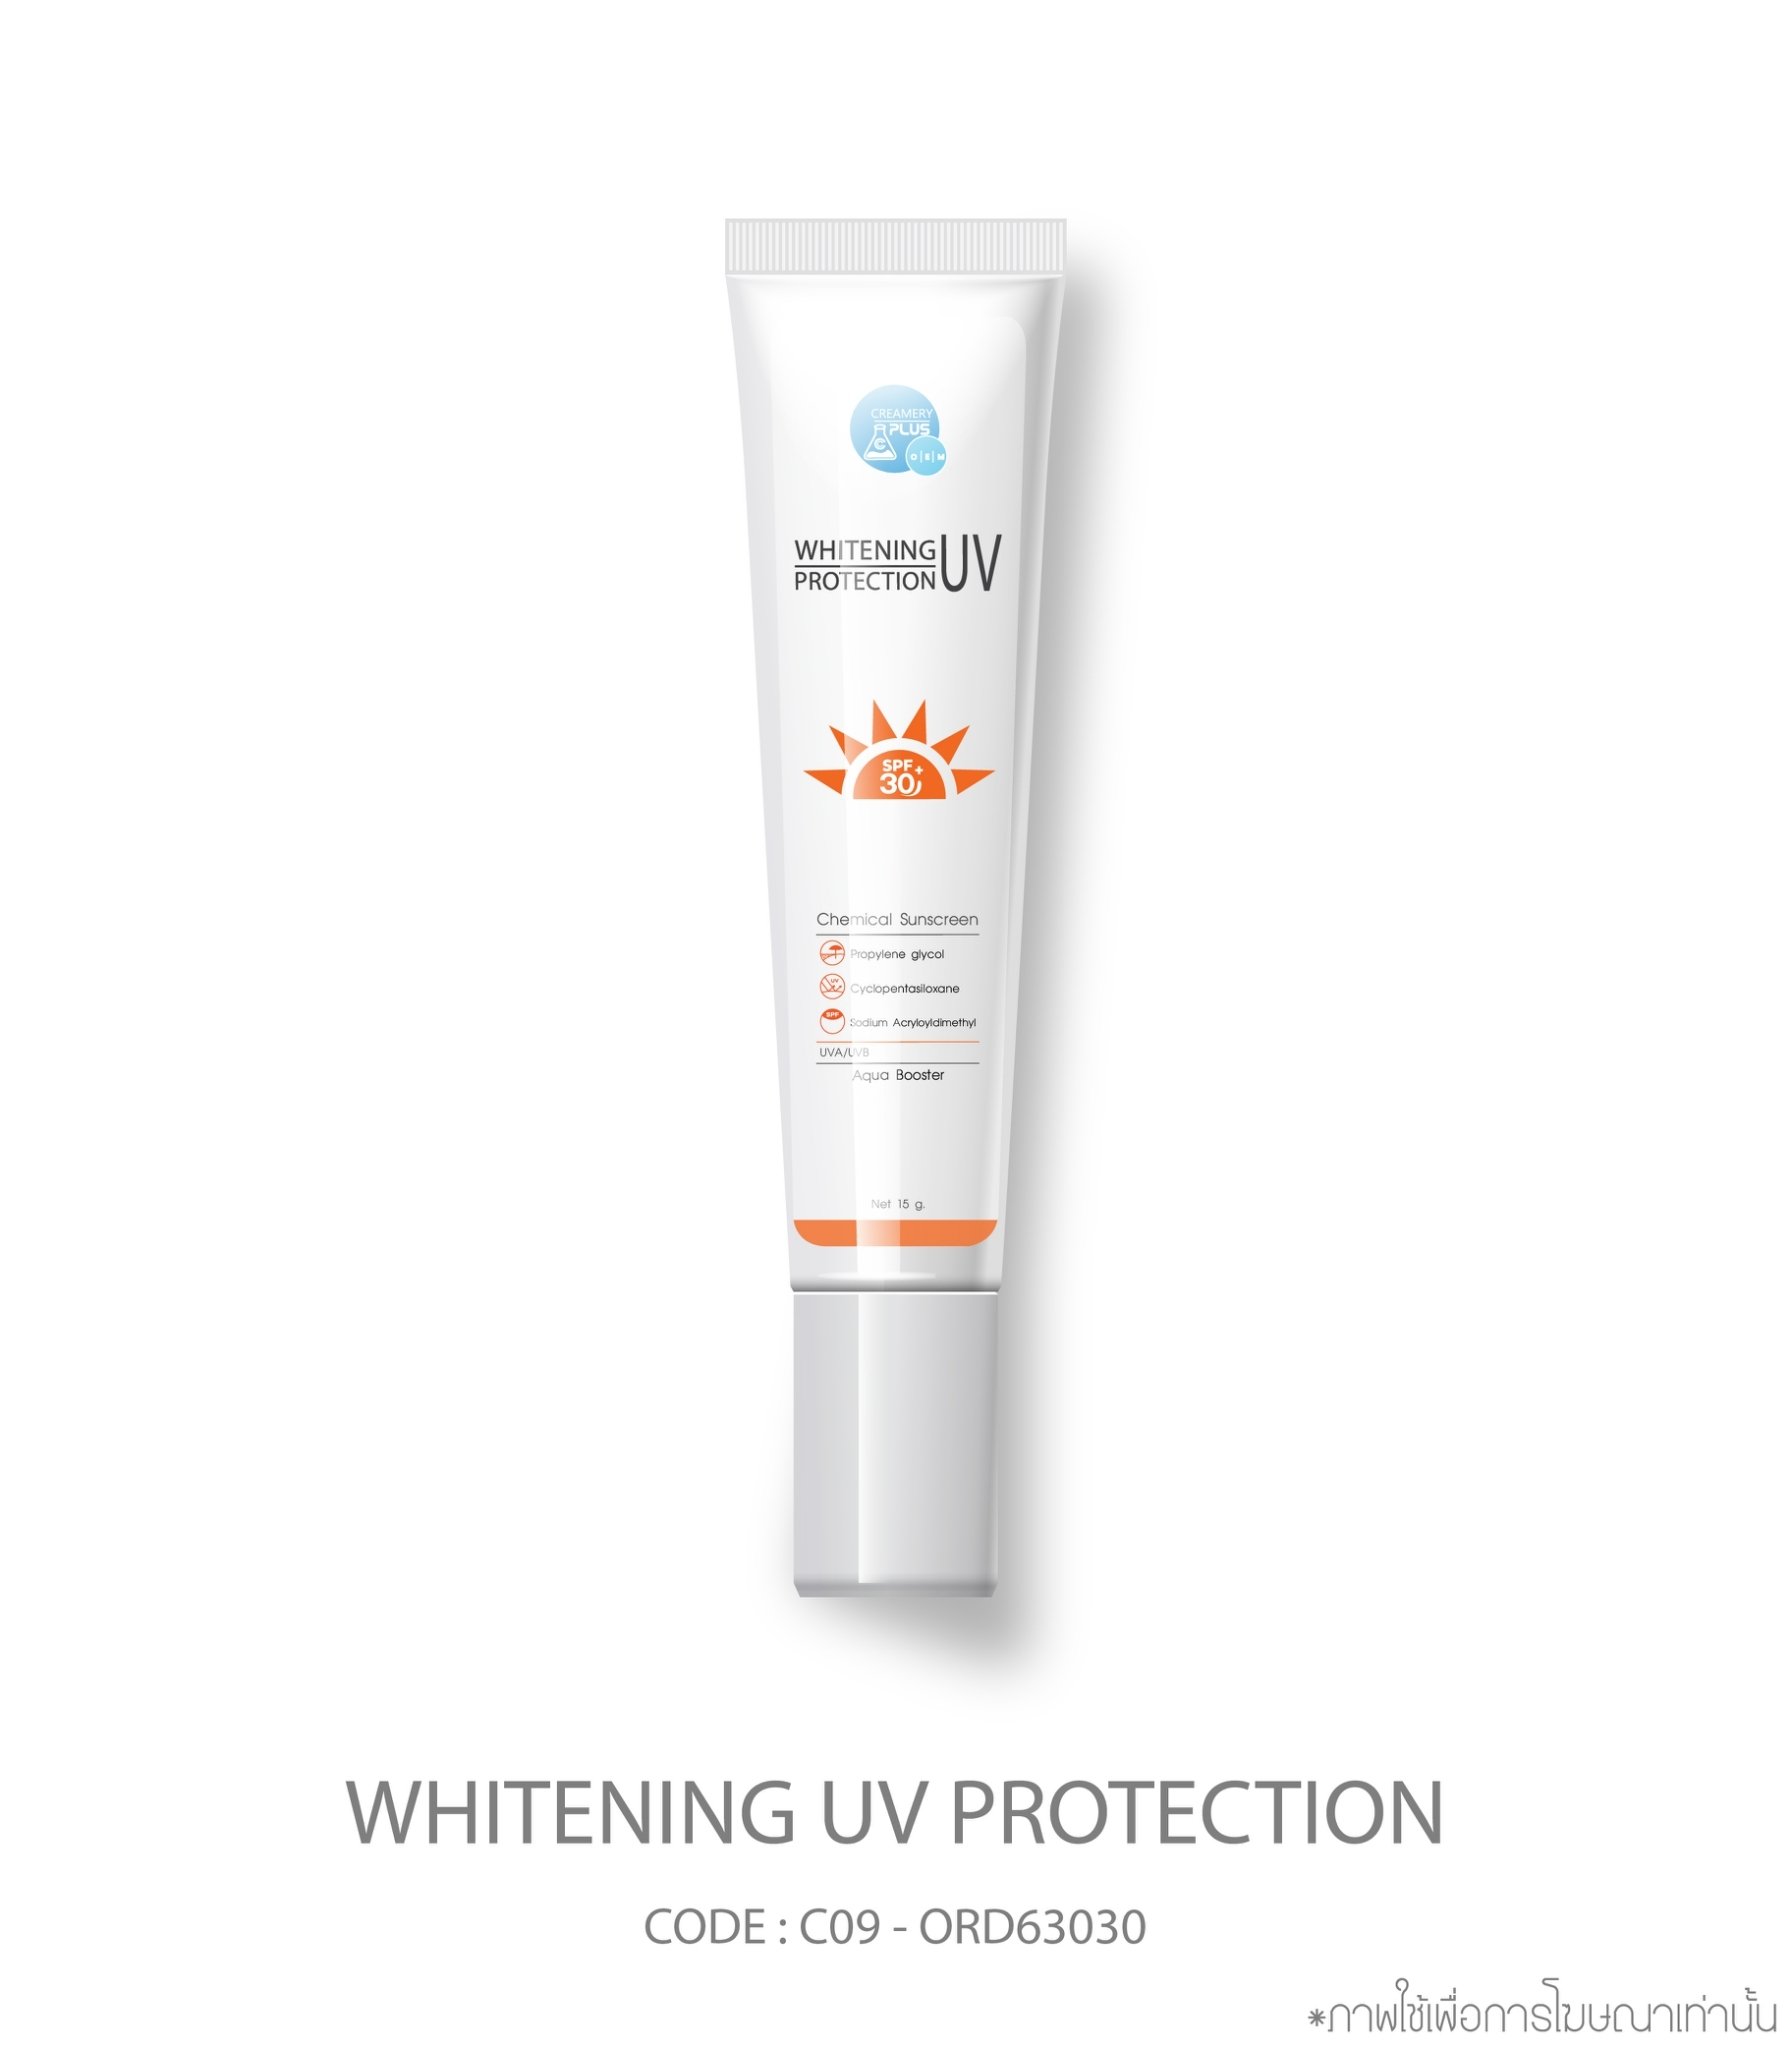 Whitening UV protection